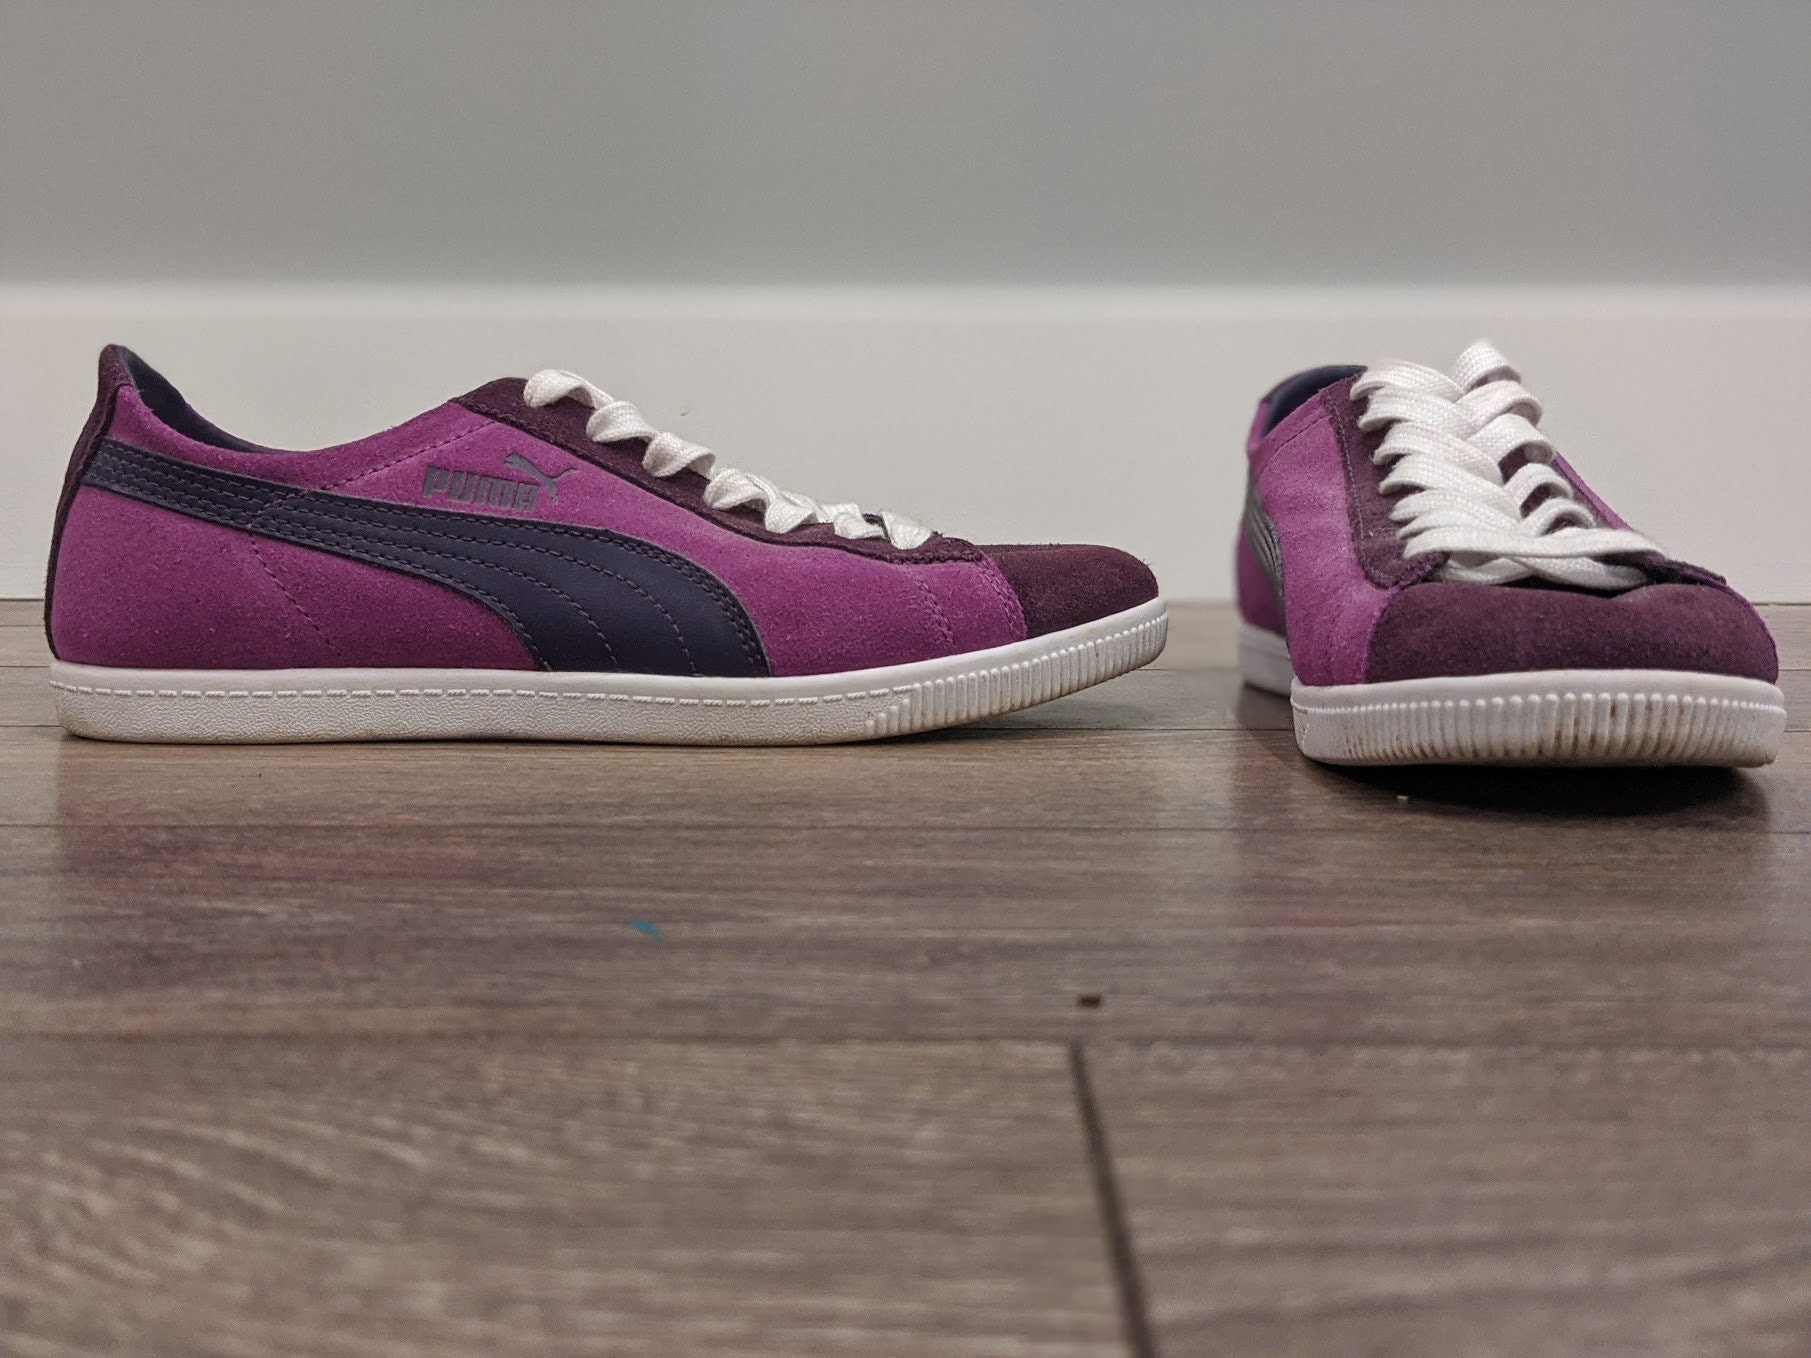 US 6 Women's Puma Purple Suede Sneakers Tennis Shoes | Etsy